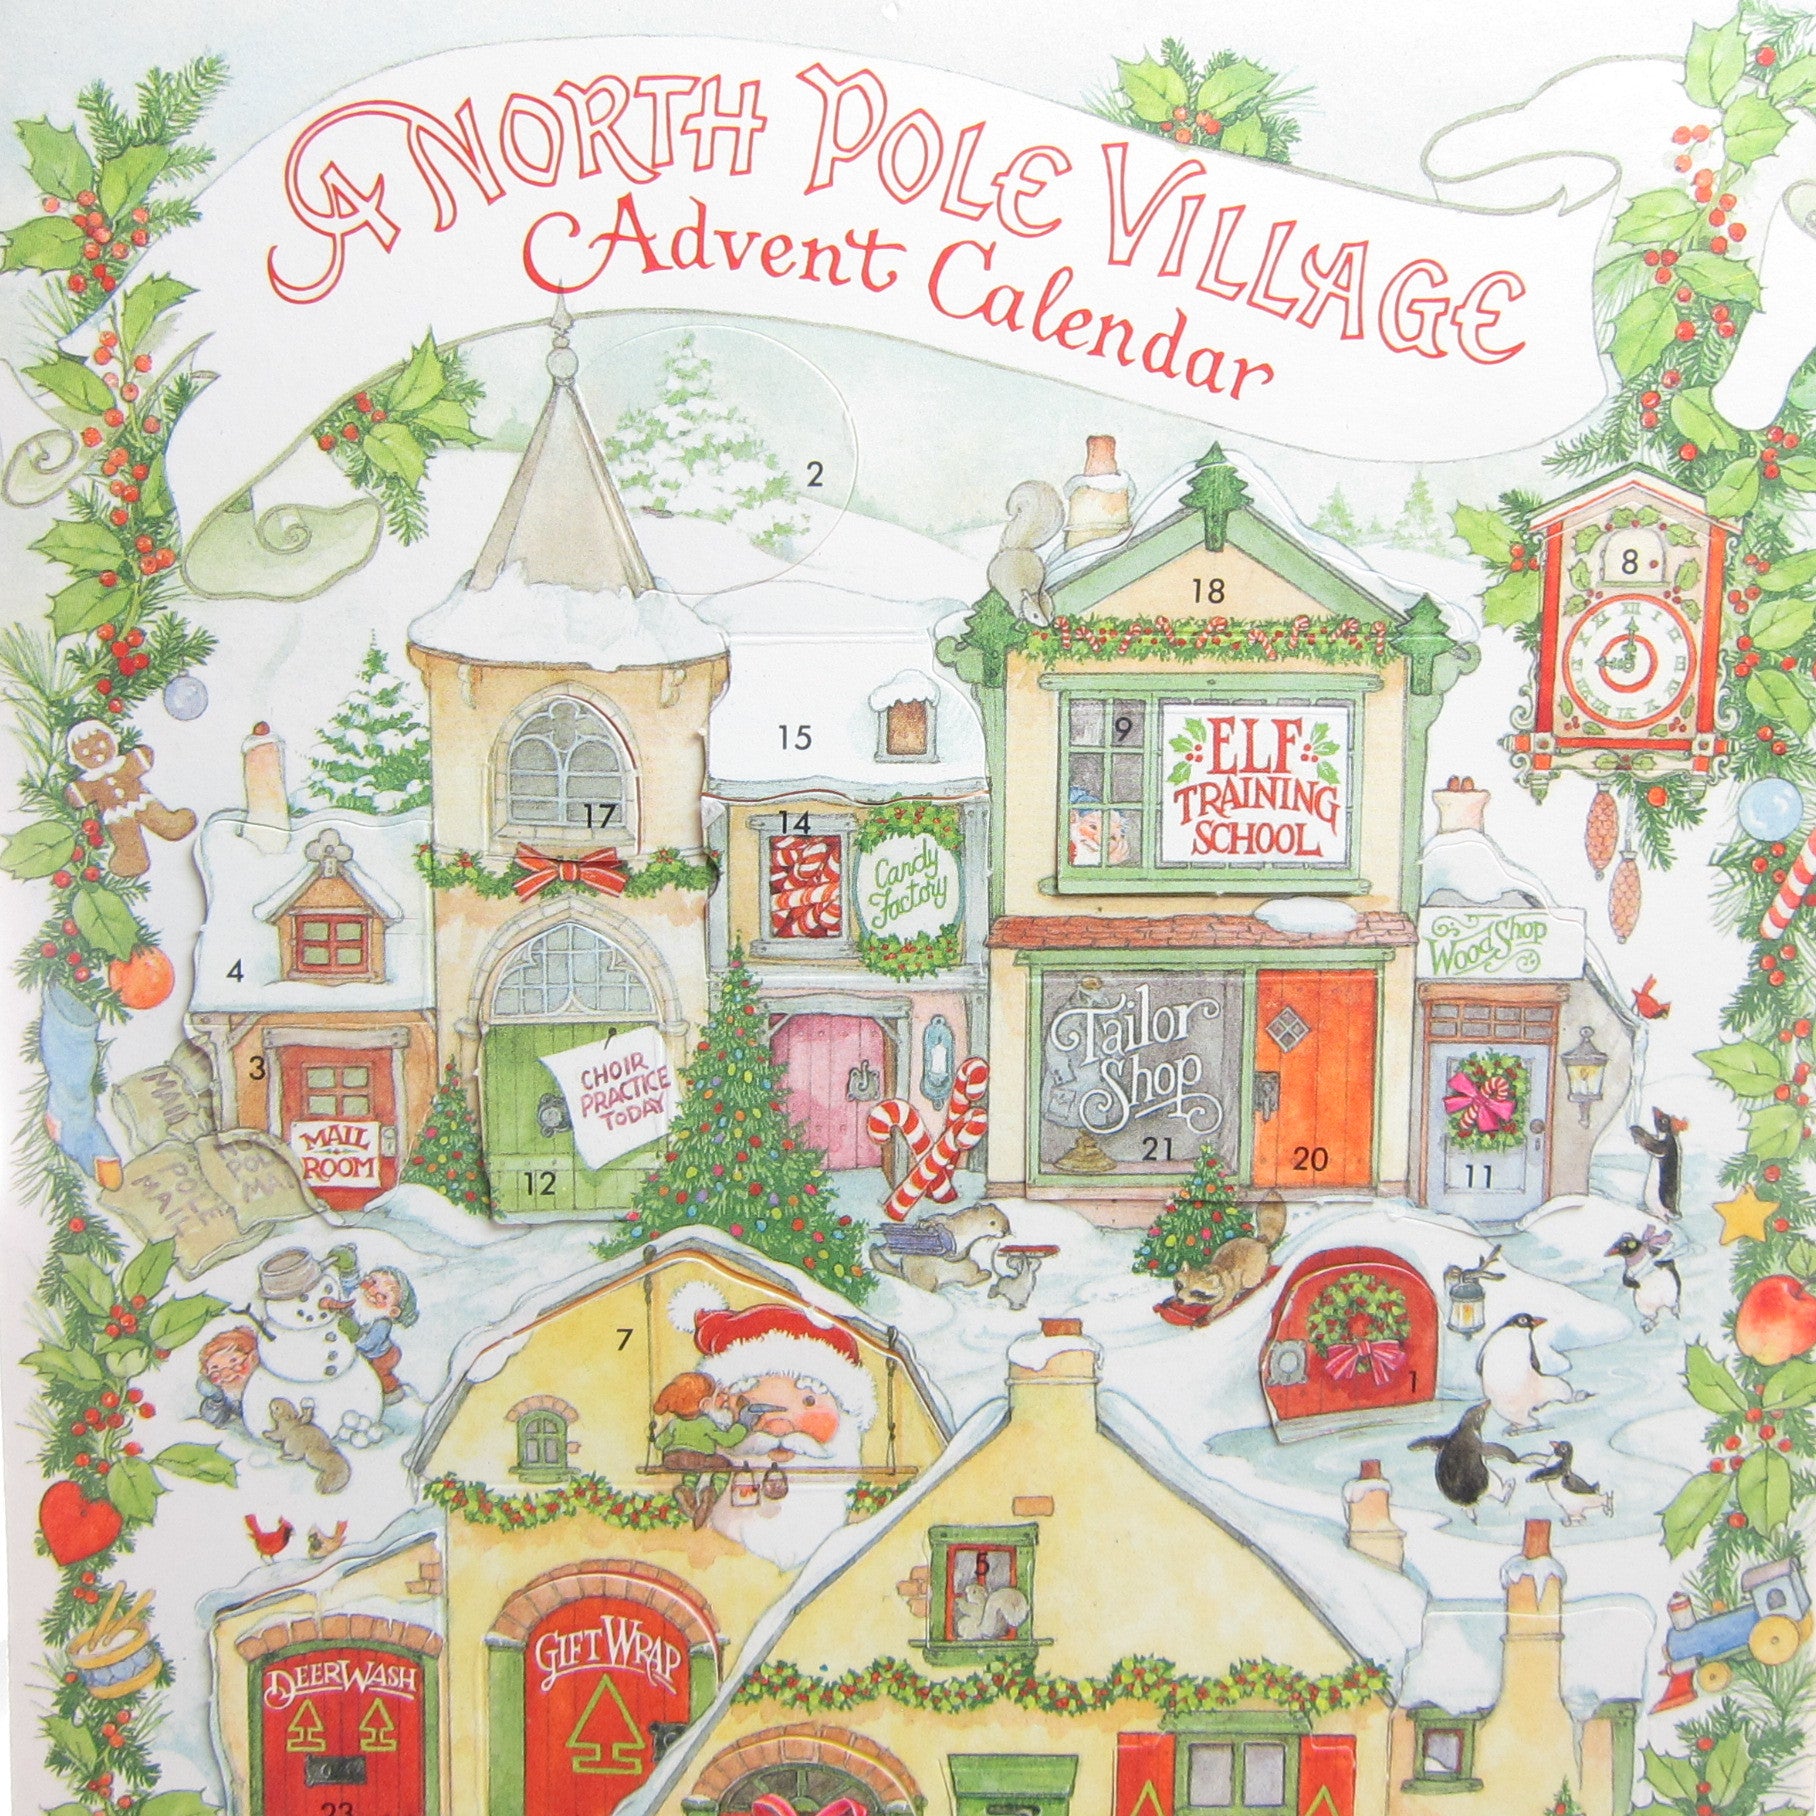 Hallmark Vintage Christmas Advent Calendar A North Pole Village